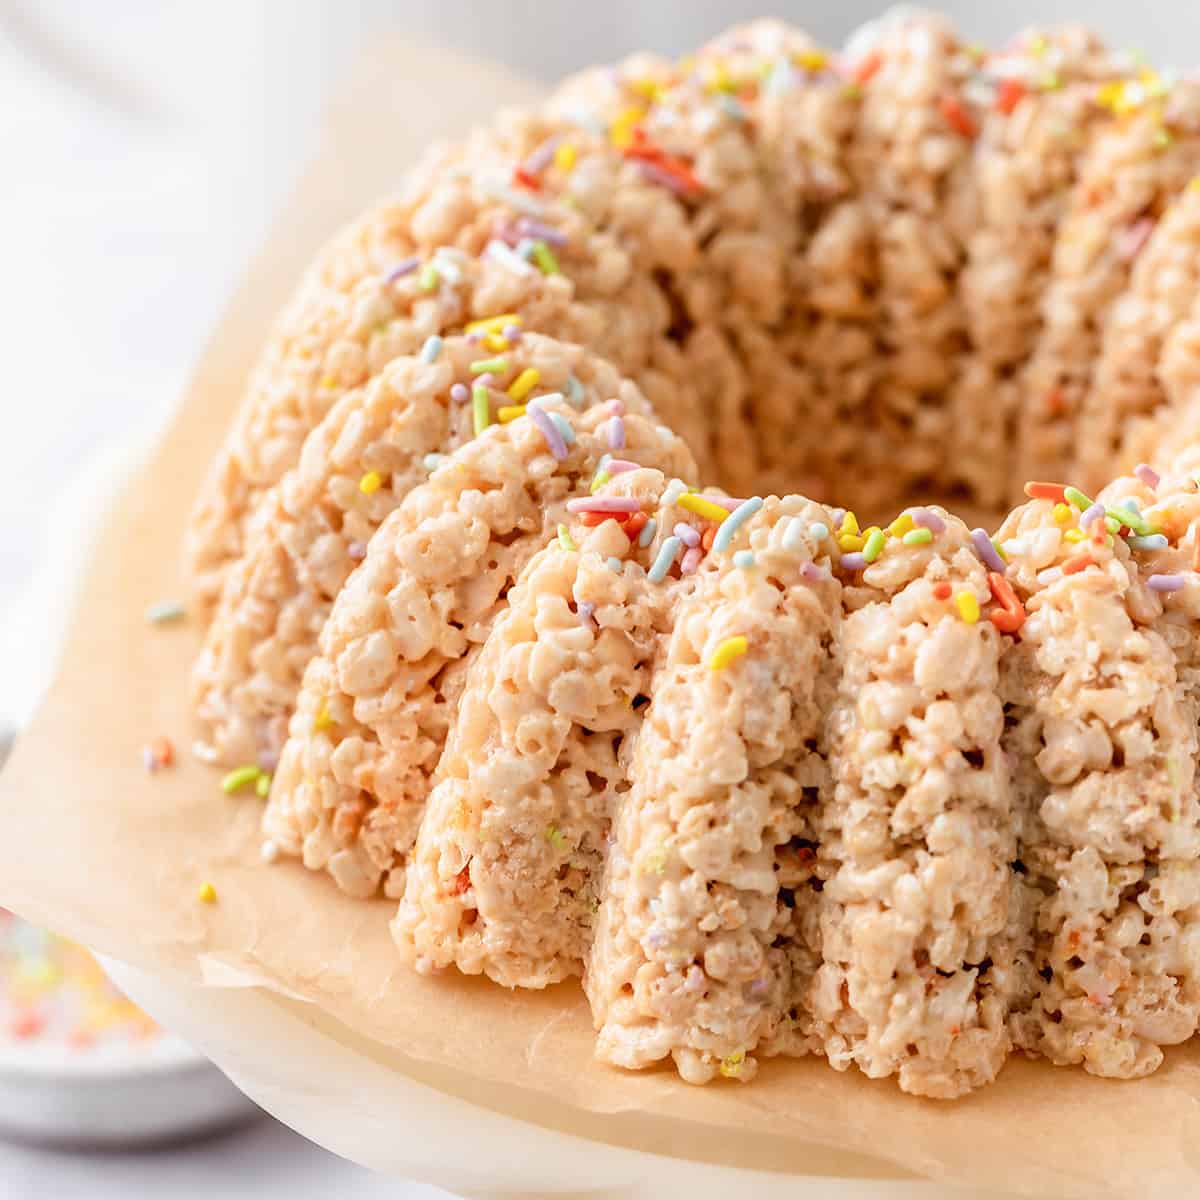 Rice Crispy Cake topped with sprinkles